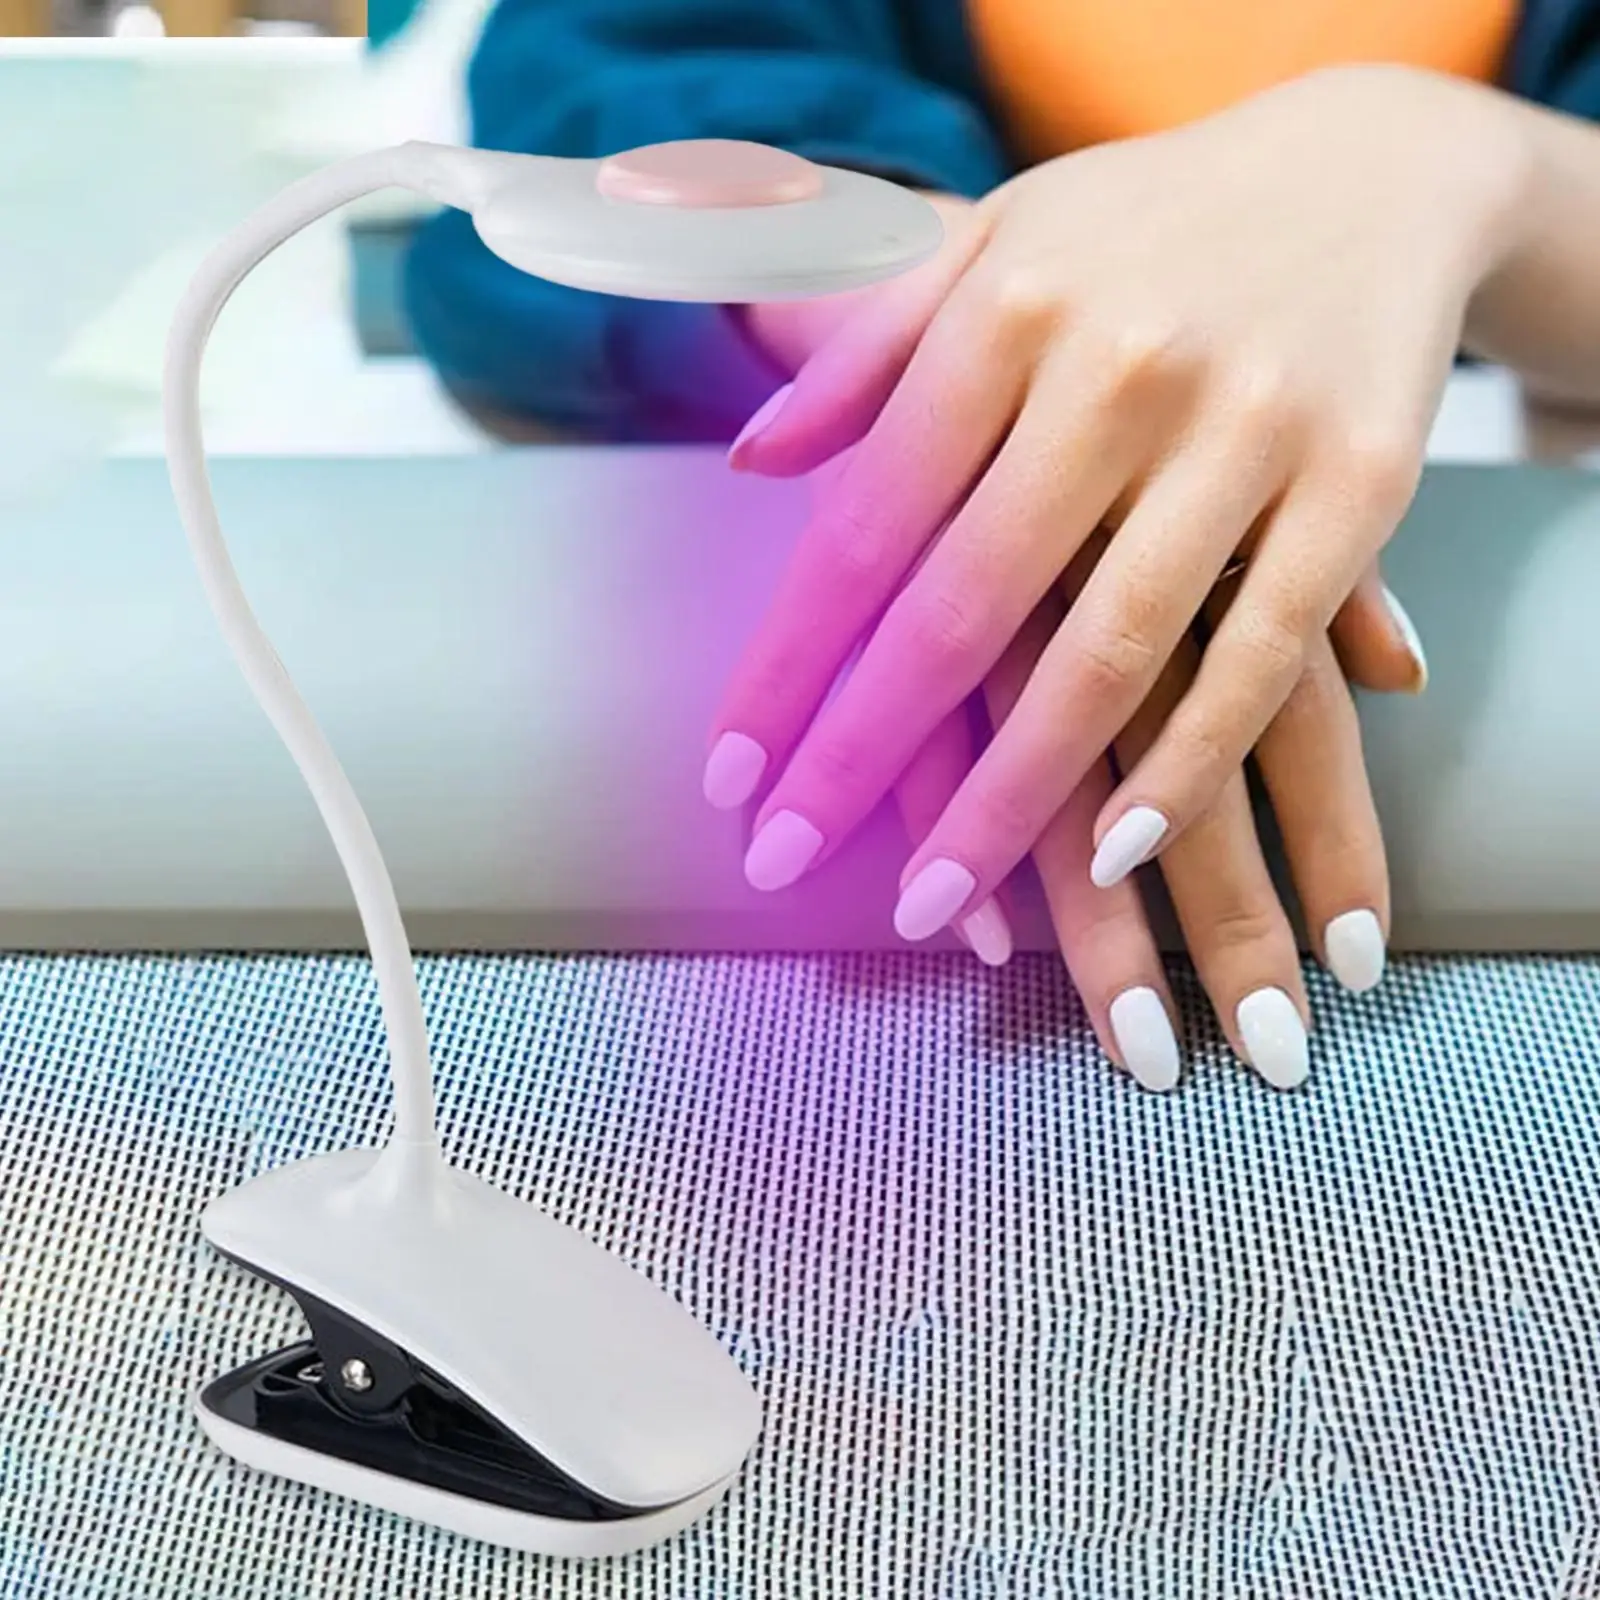 UV LED Nail Lamp 360 Degree Rotatable Nail Polish Dryer Flexible Desk Lamps Nail Polish Curing Lamp for Nail Salon Manicure Tool